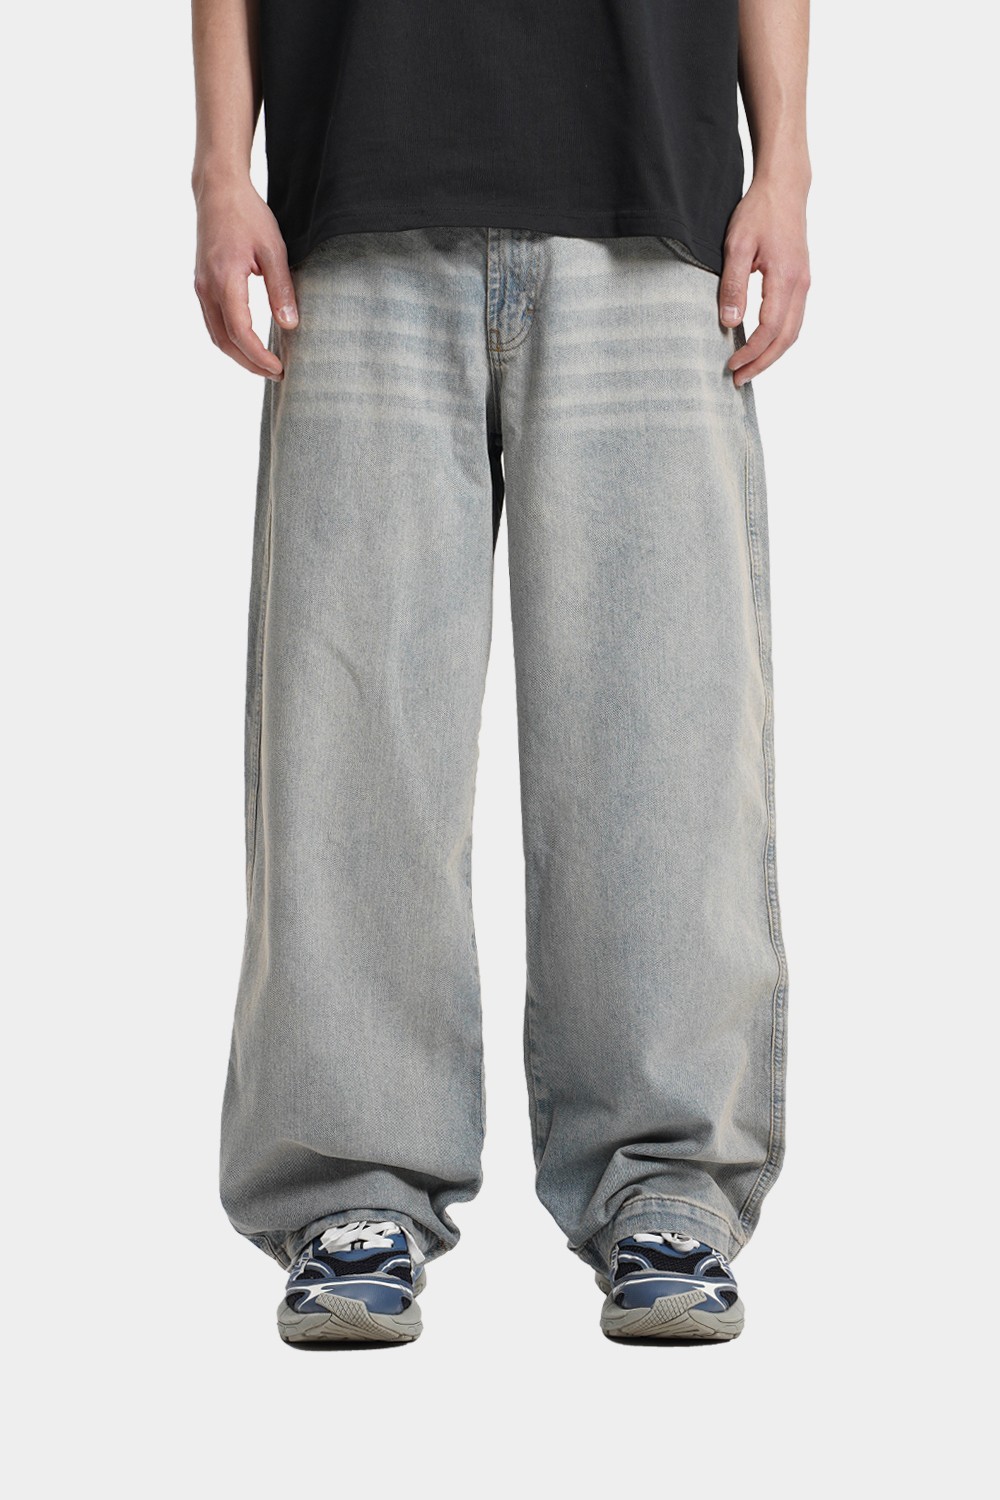 Ultra Baggy Sunbleached Wash Neo Skate Jeans (URBN-B-203)